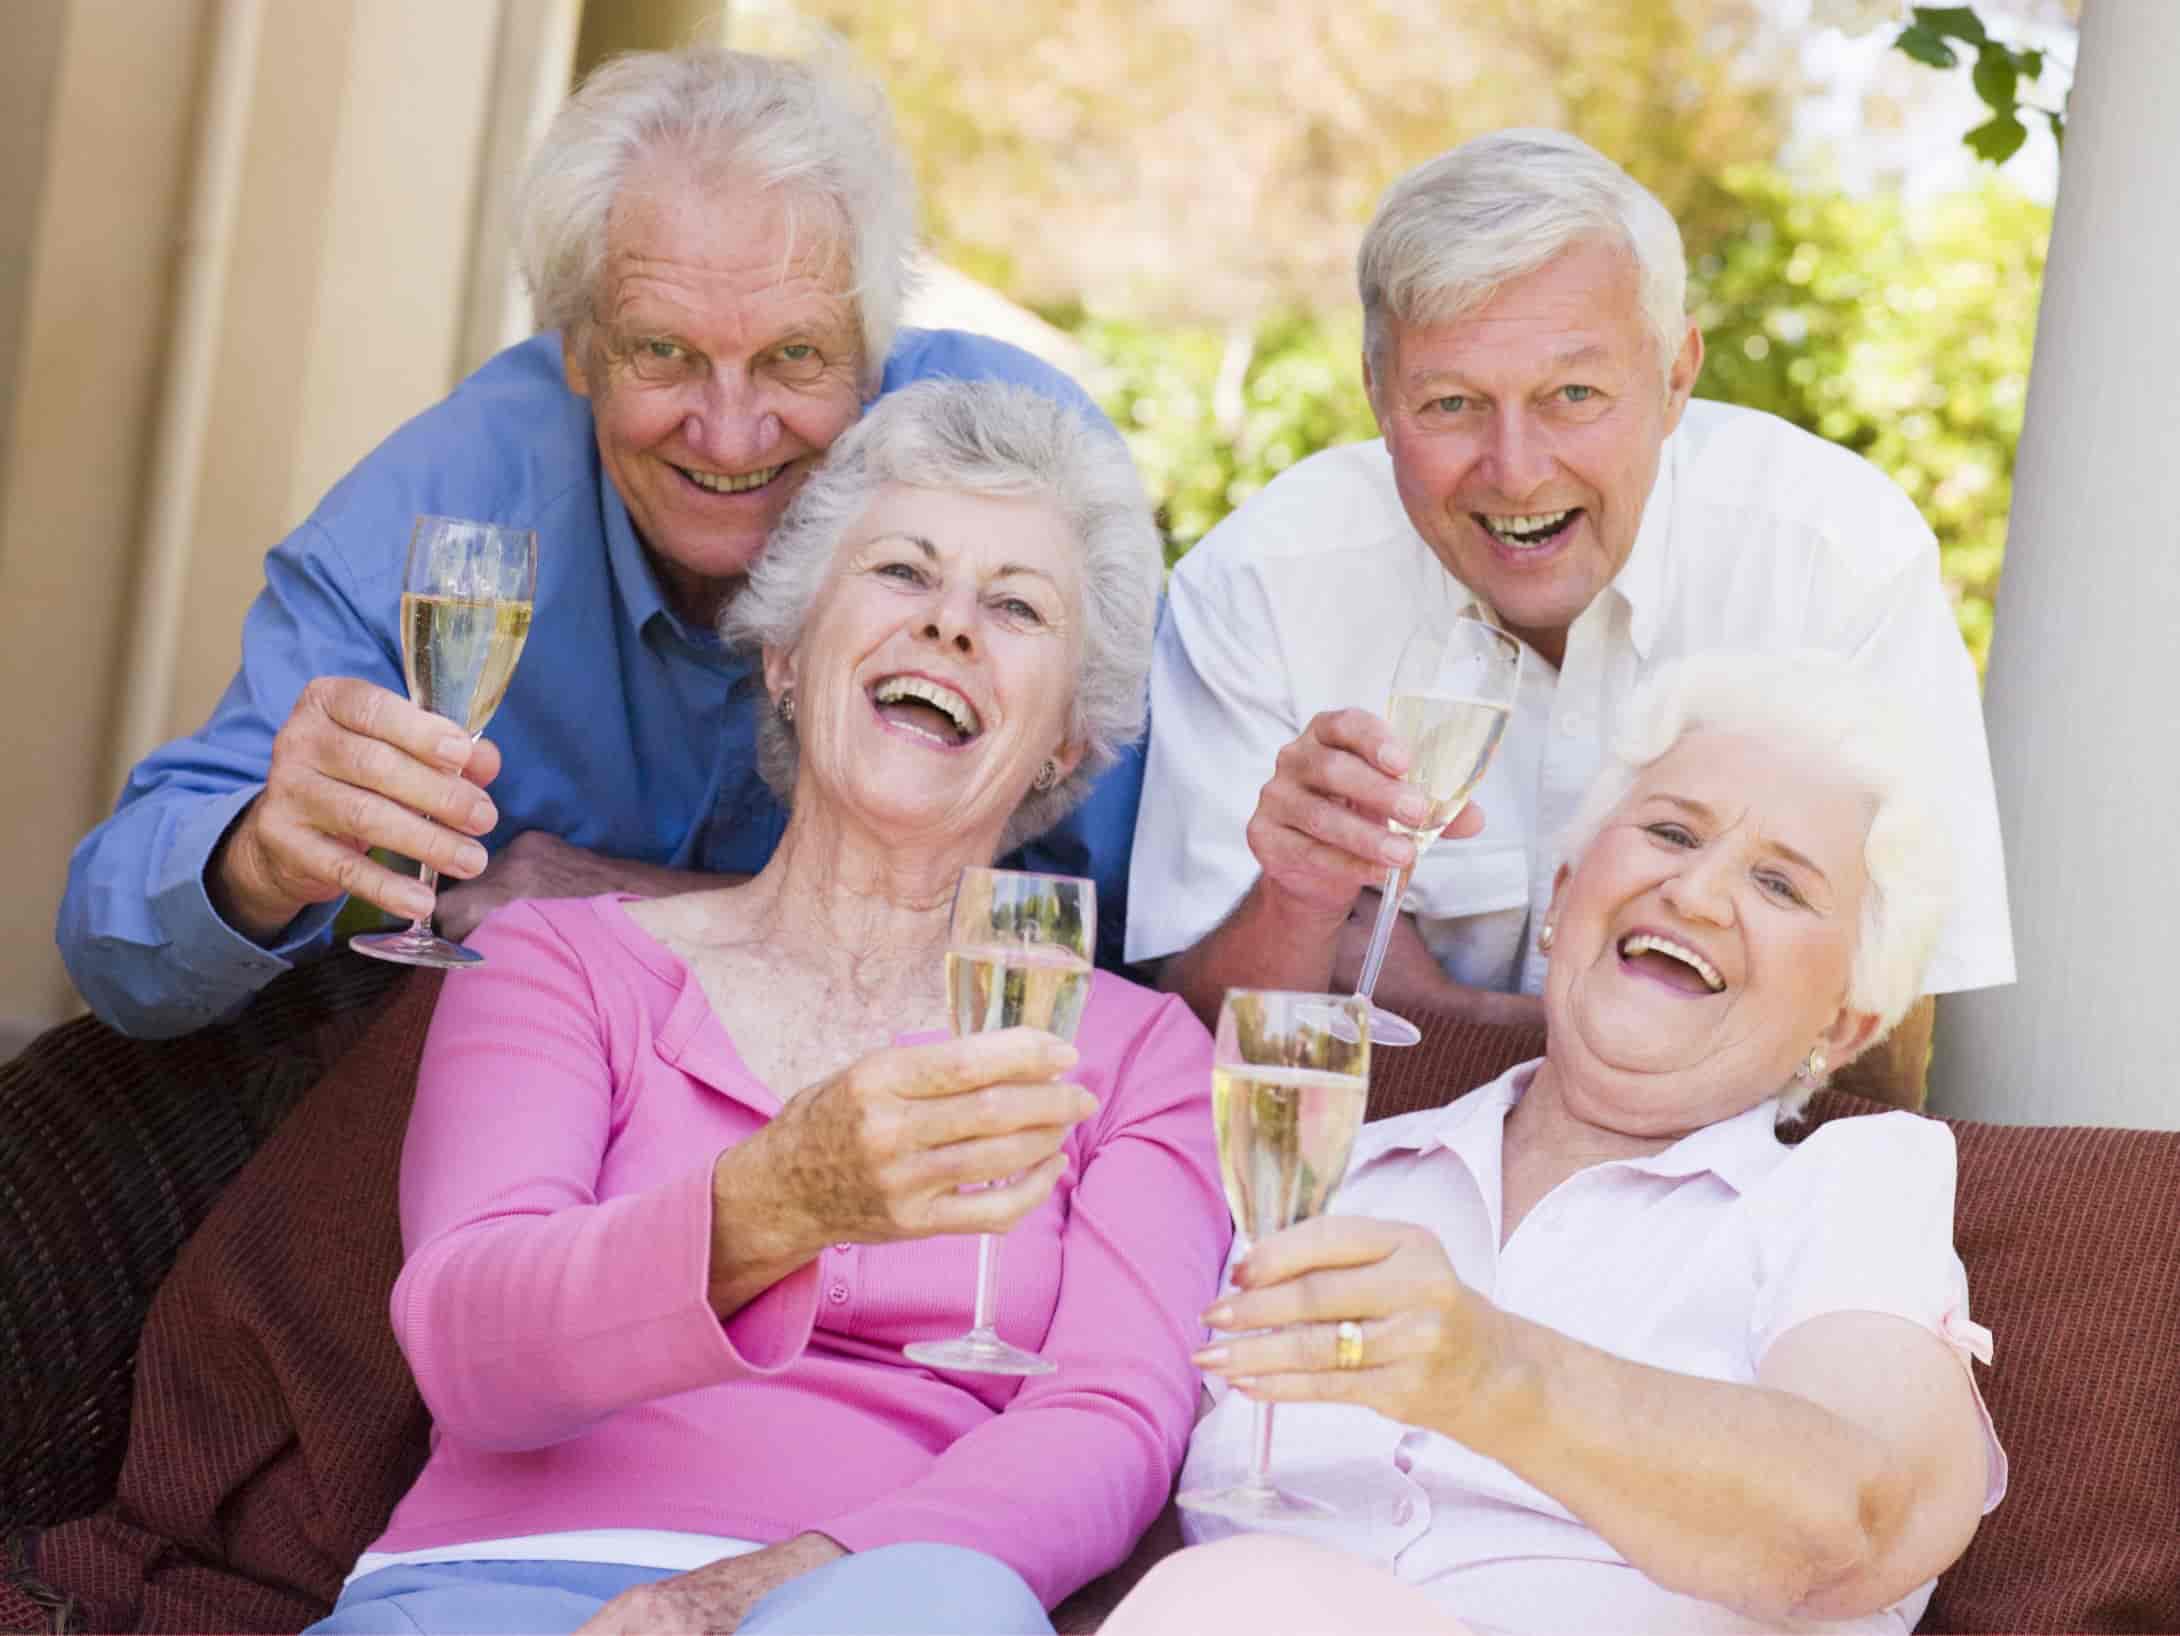 Senior couples enjoying the benefits of senior living.